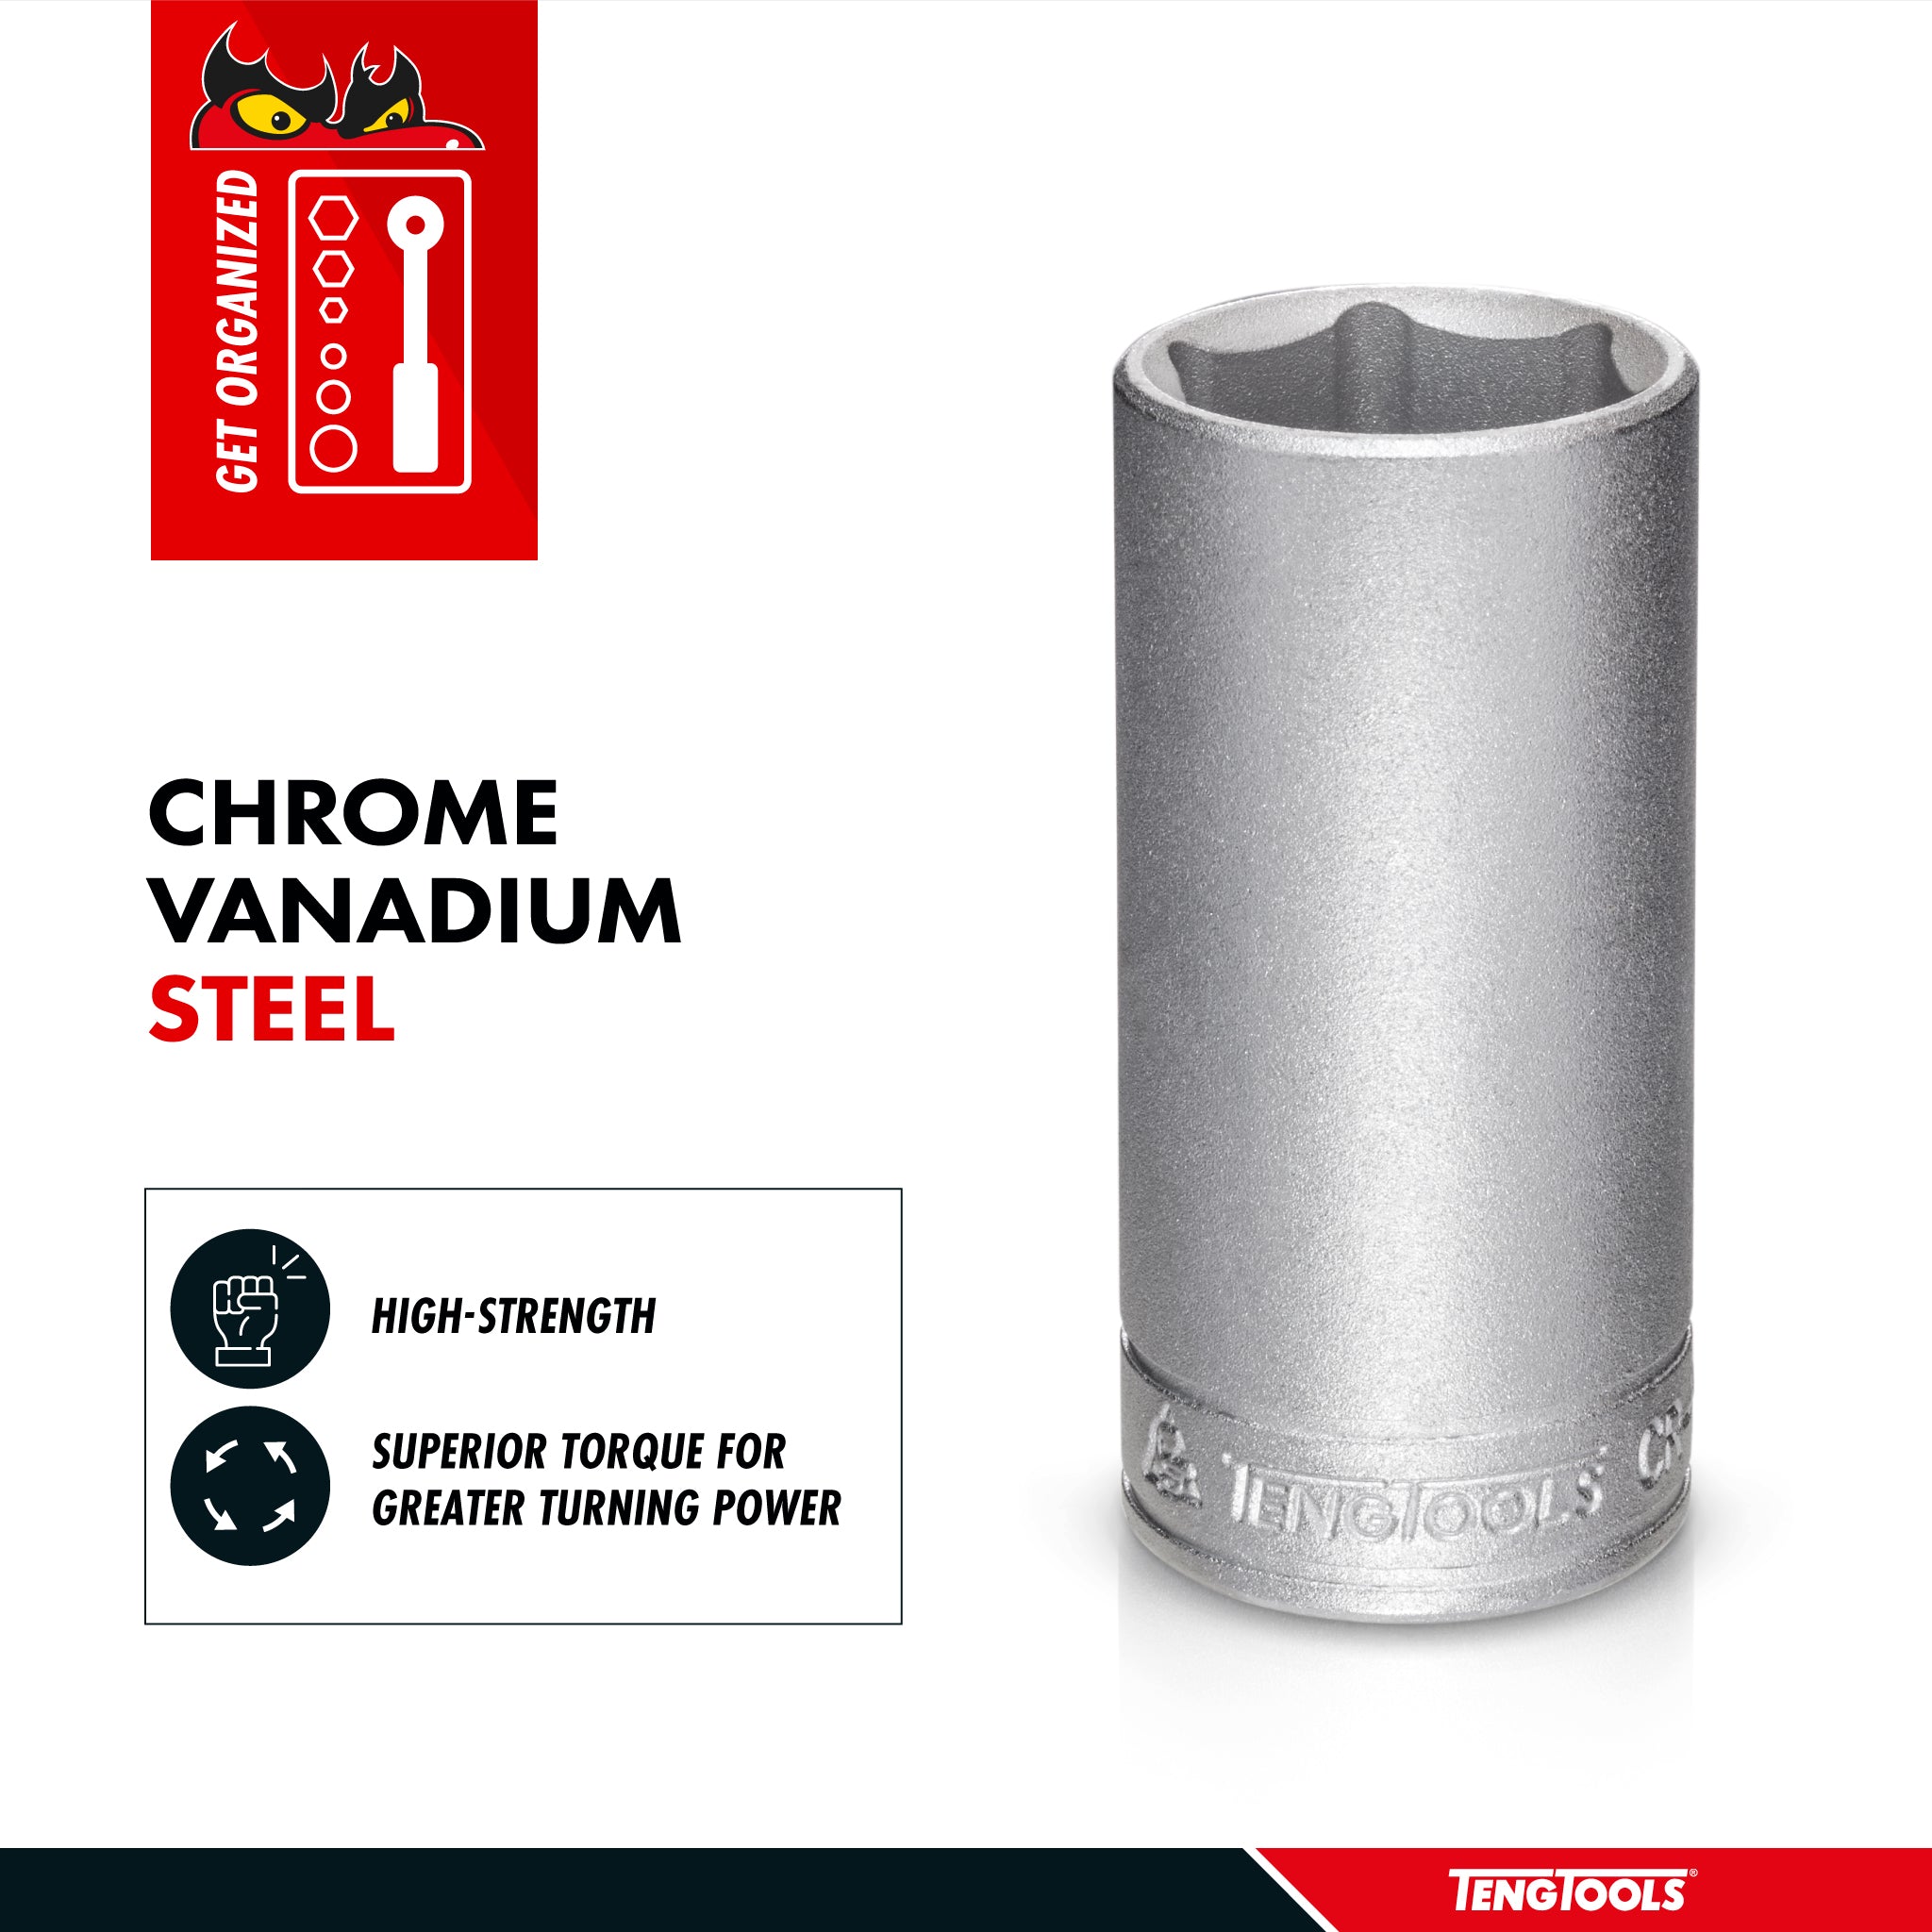 Teng Tools 3/8 Inch Drive 6 Point Metric Deep Chrome Vanadium Sockets - 16mm